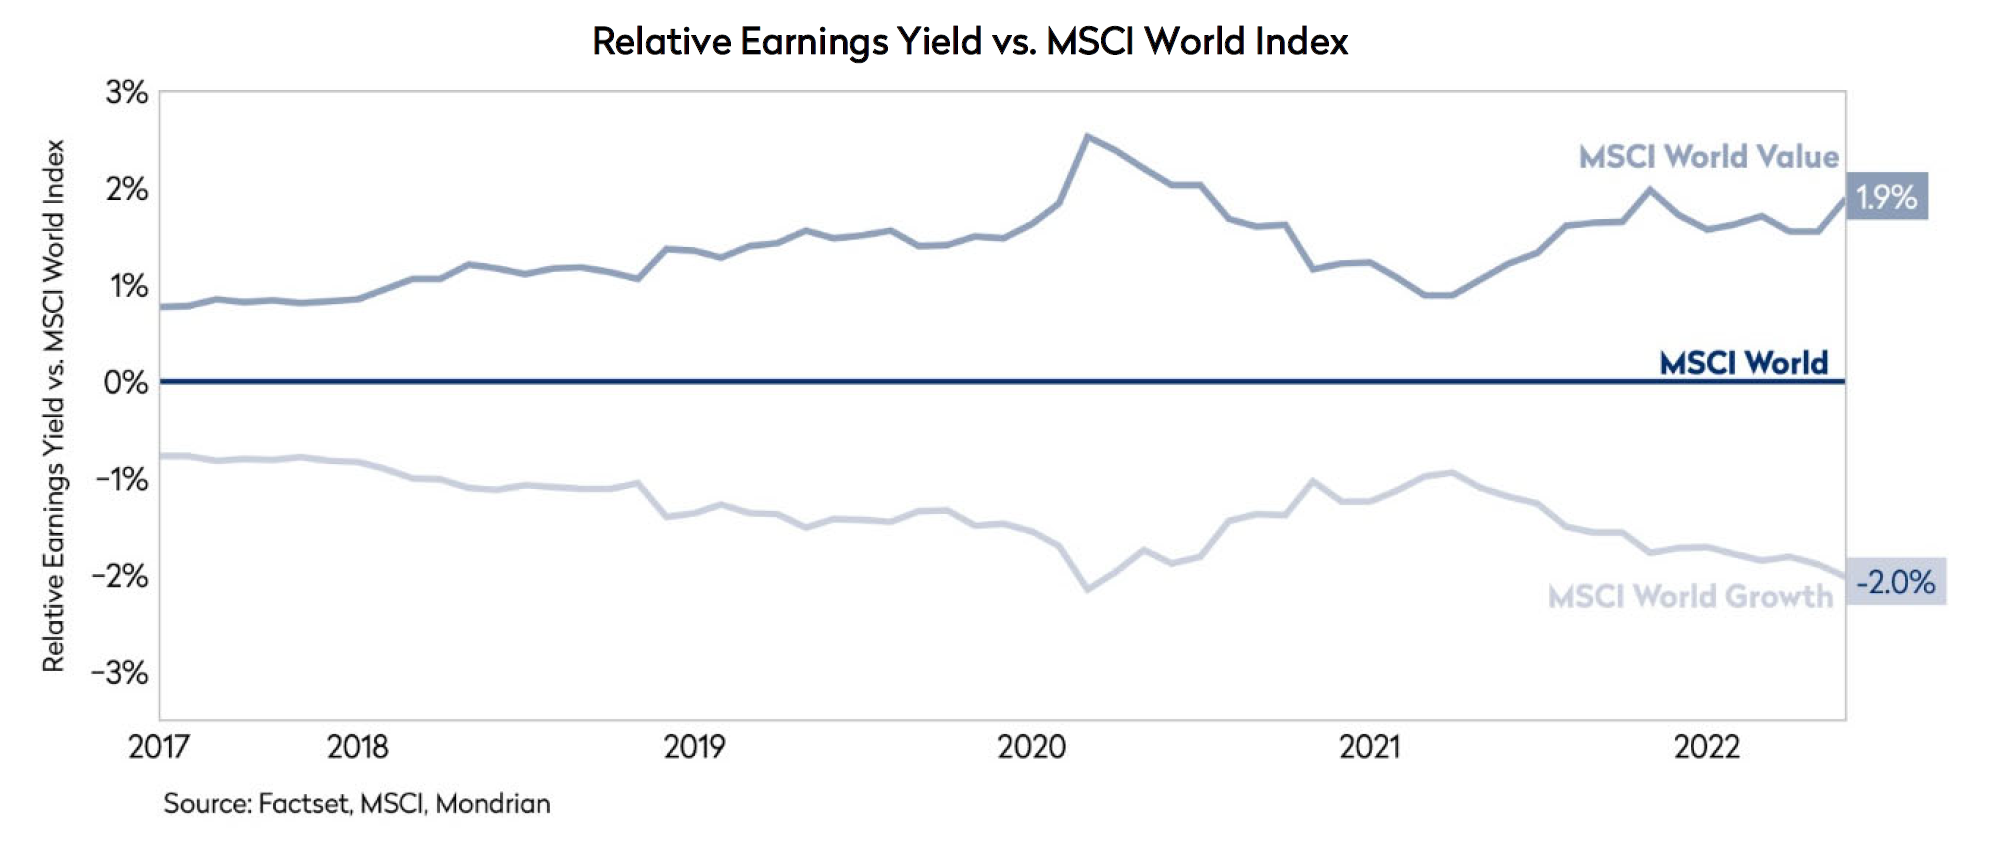 Relative earnings yield vs MSCI World Index